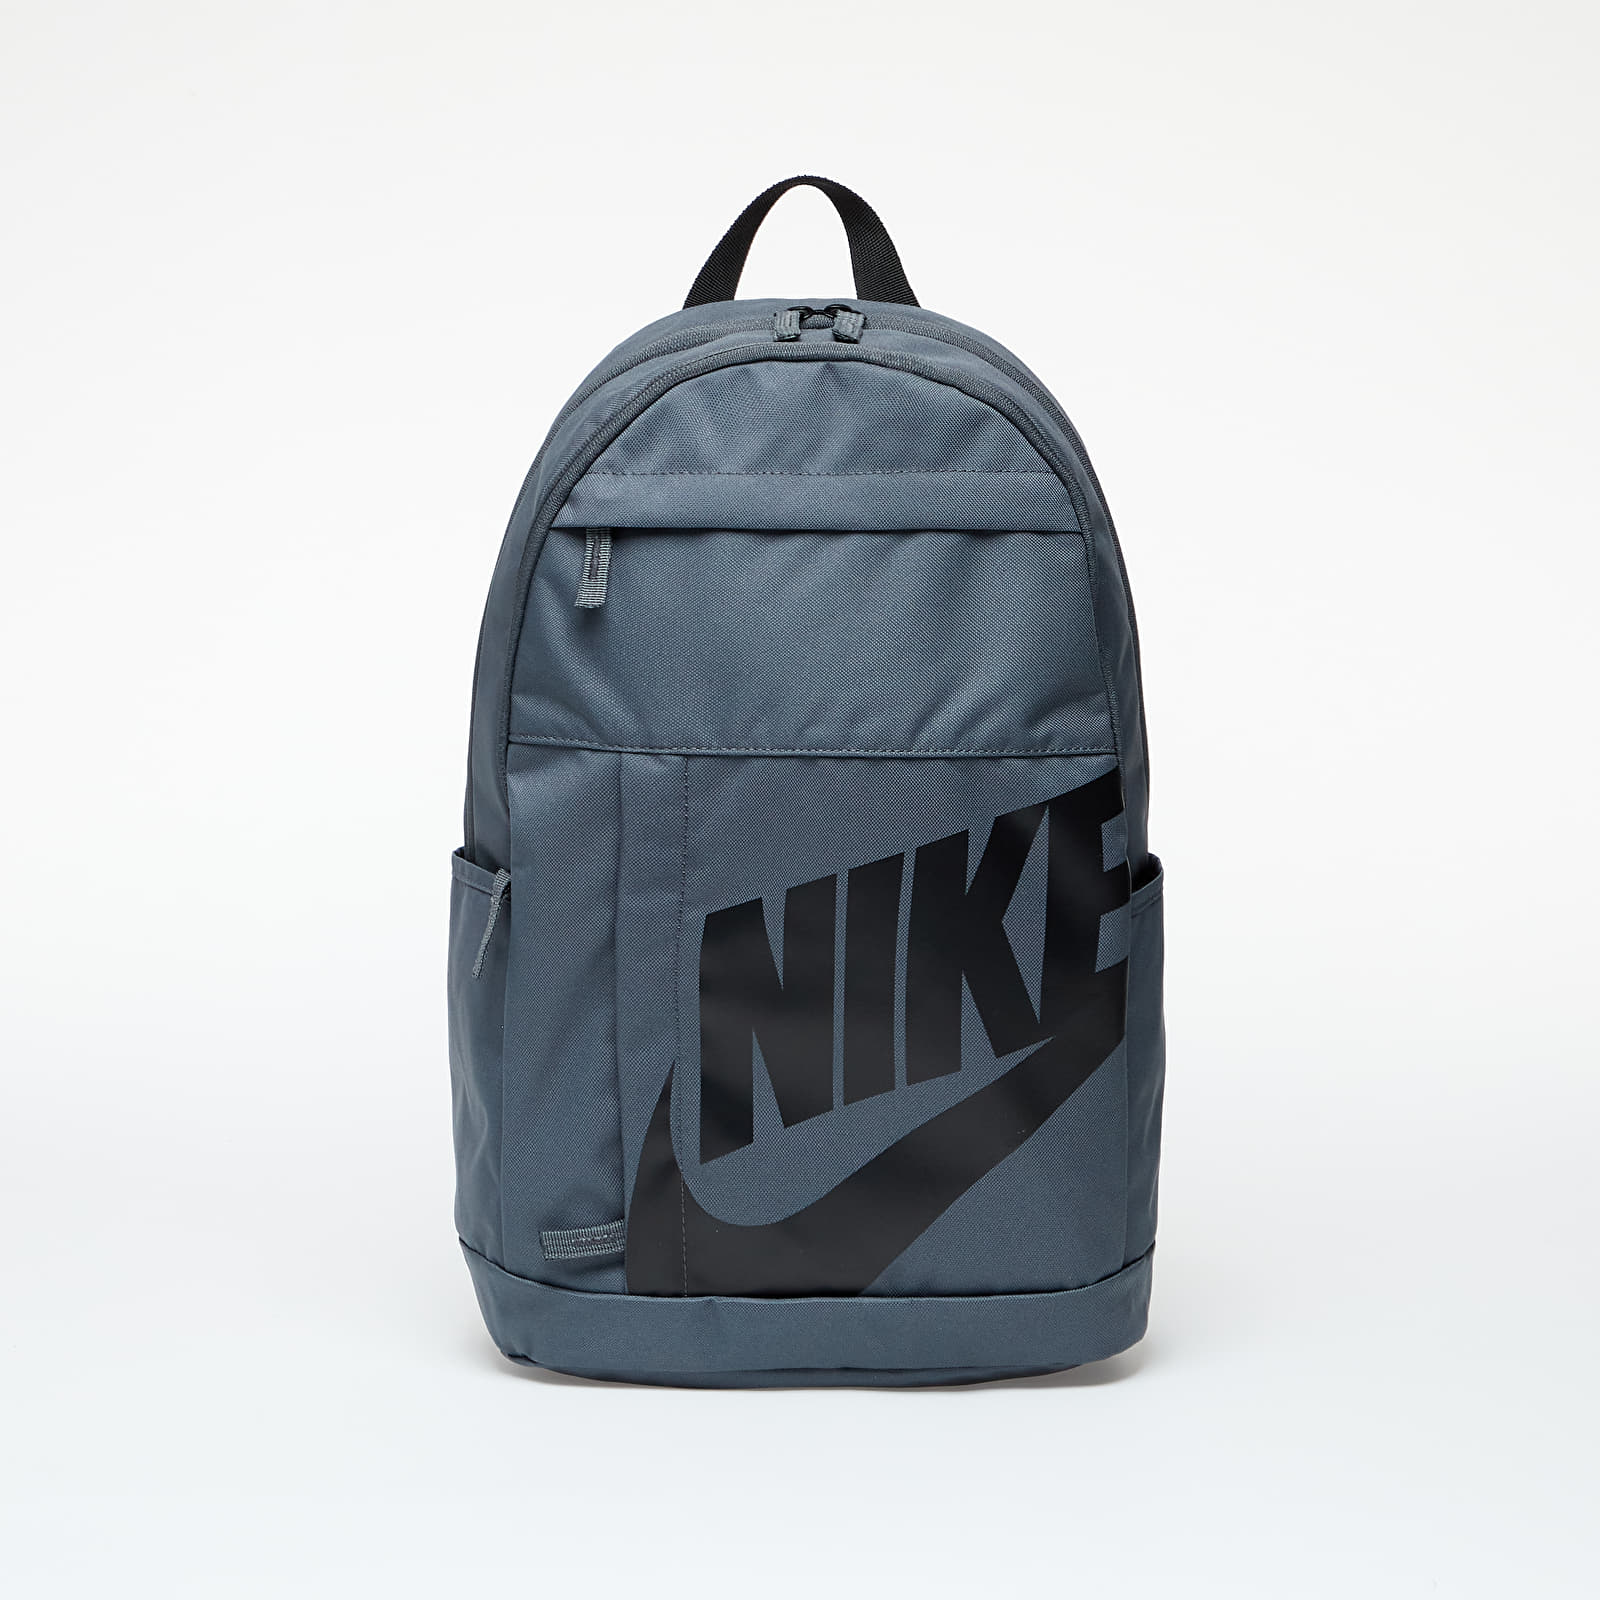 Раници Nike Backpack Iron Grey/ Iron Grey/ Black 808258